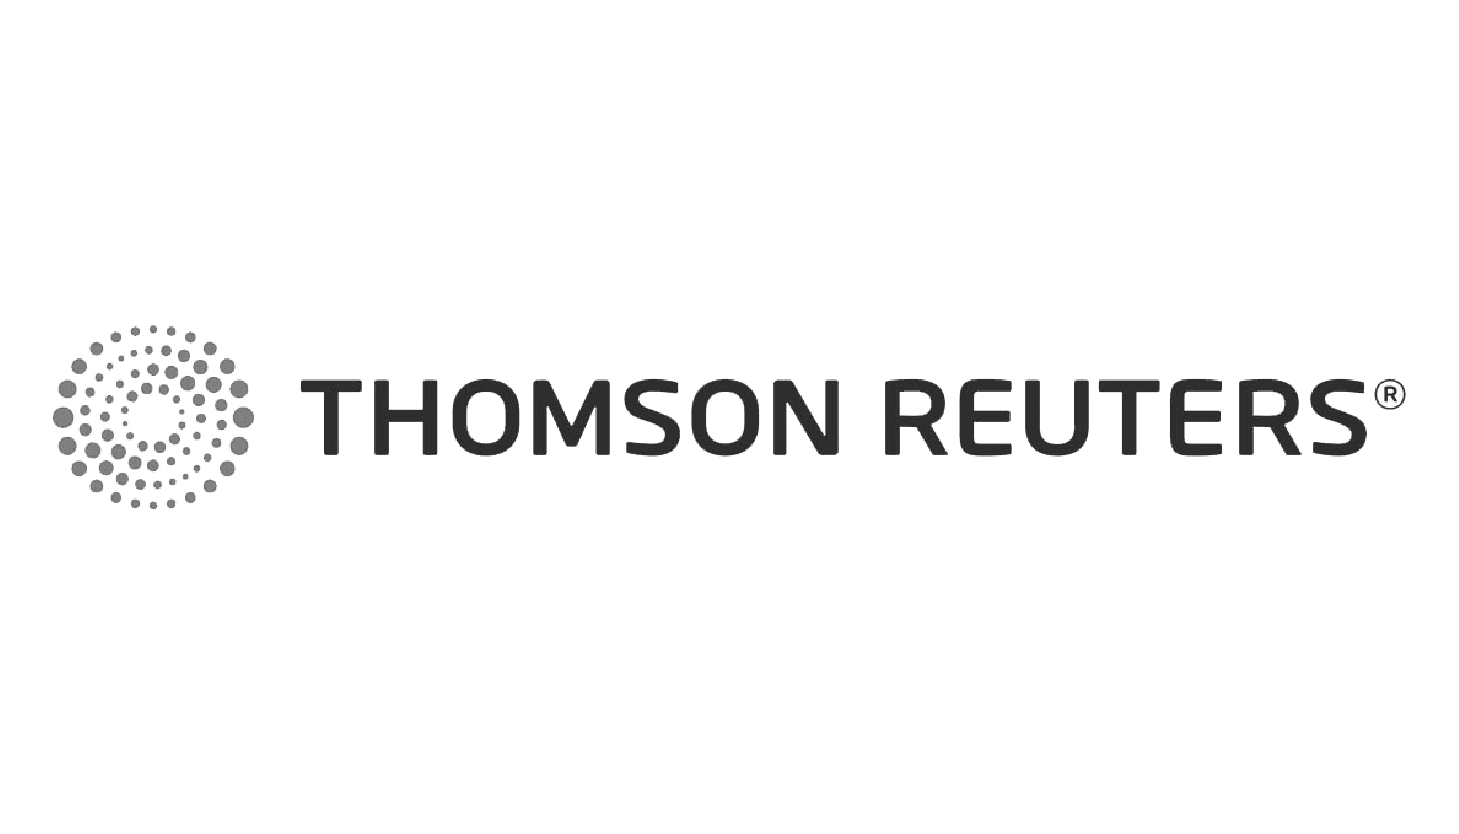 Thompson Reuters logo